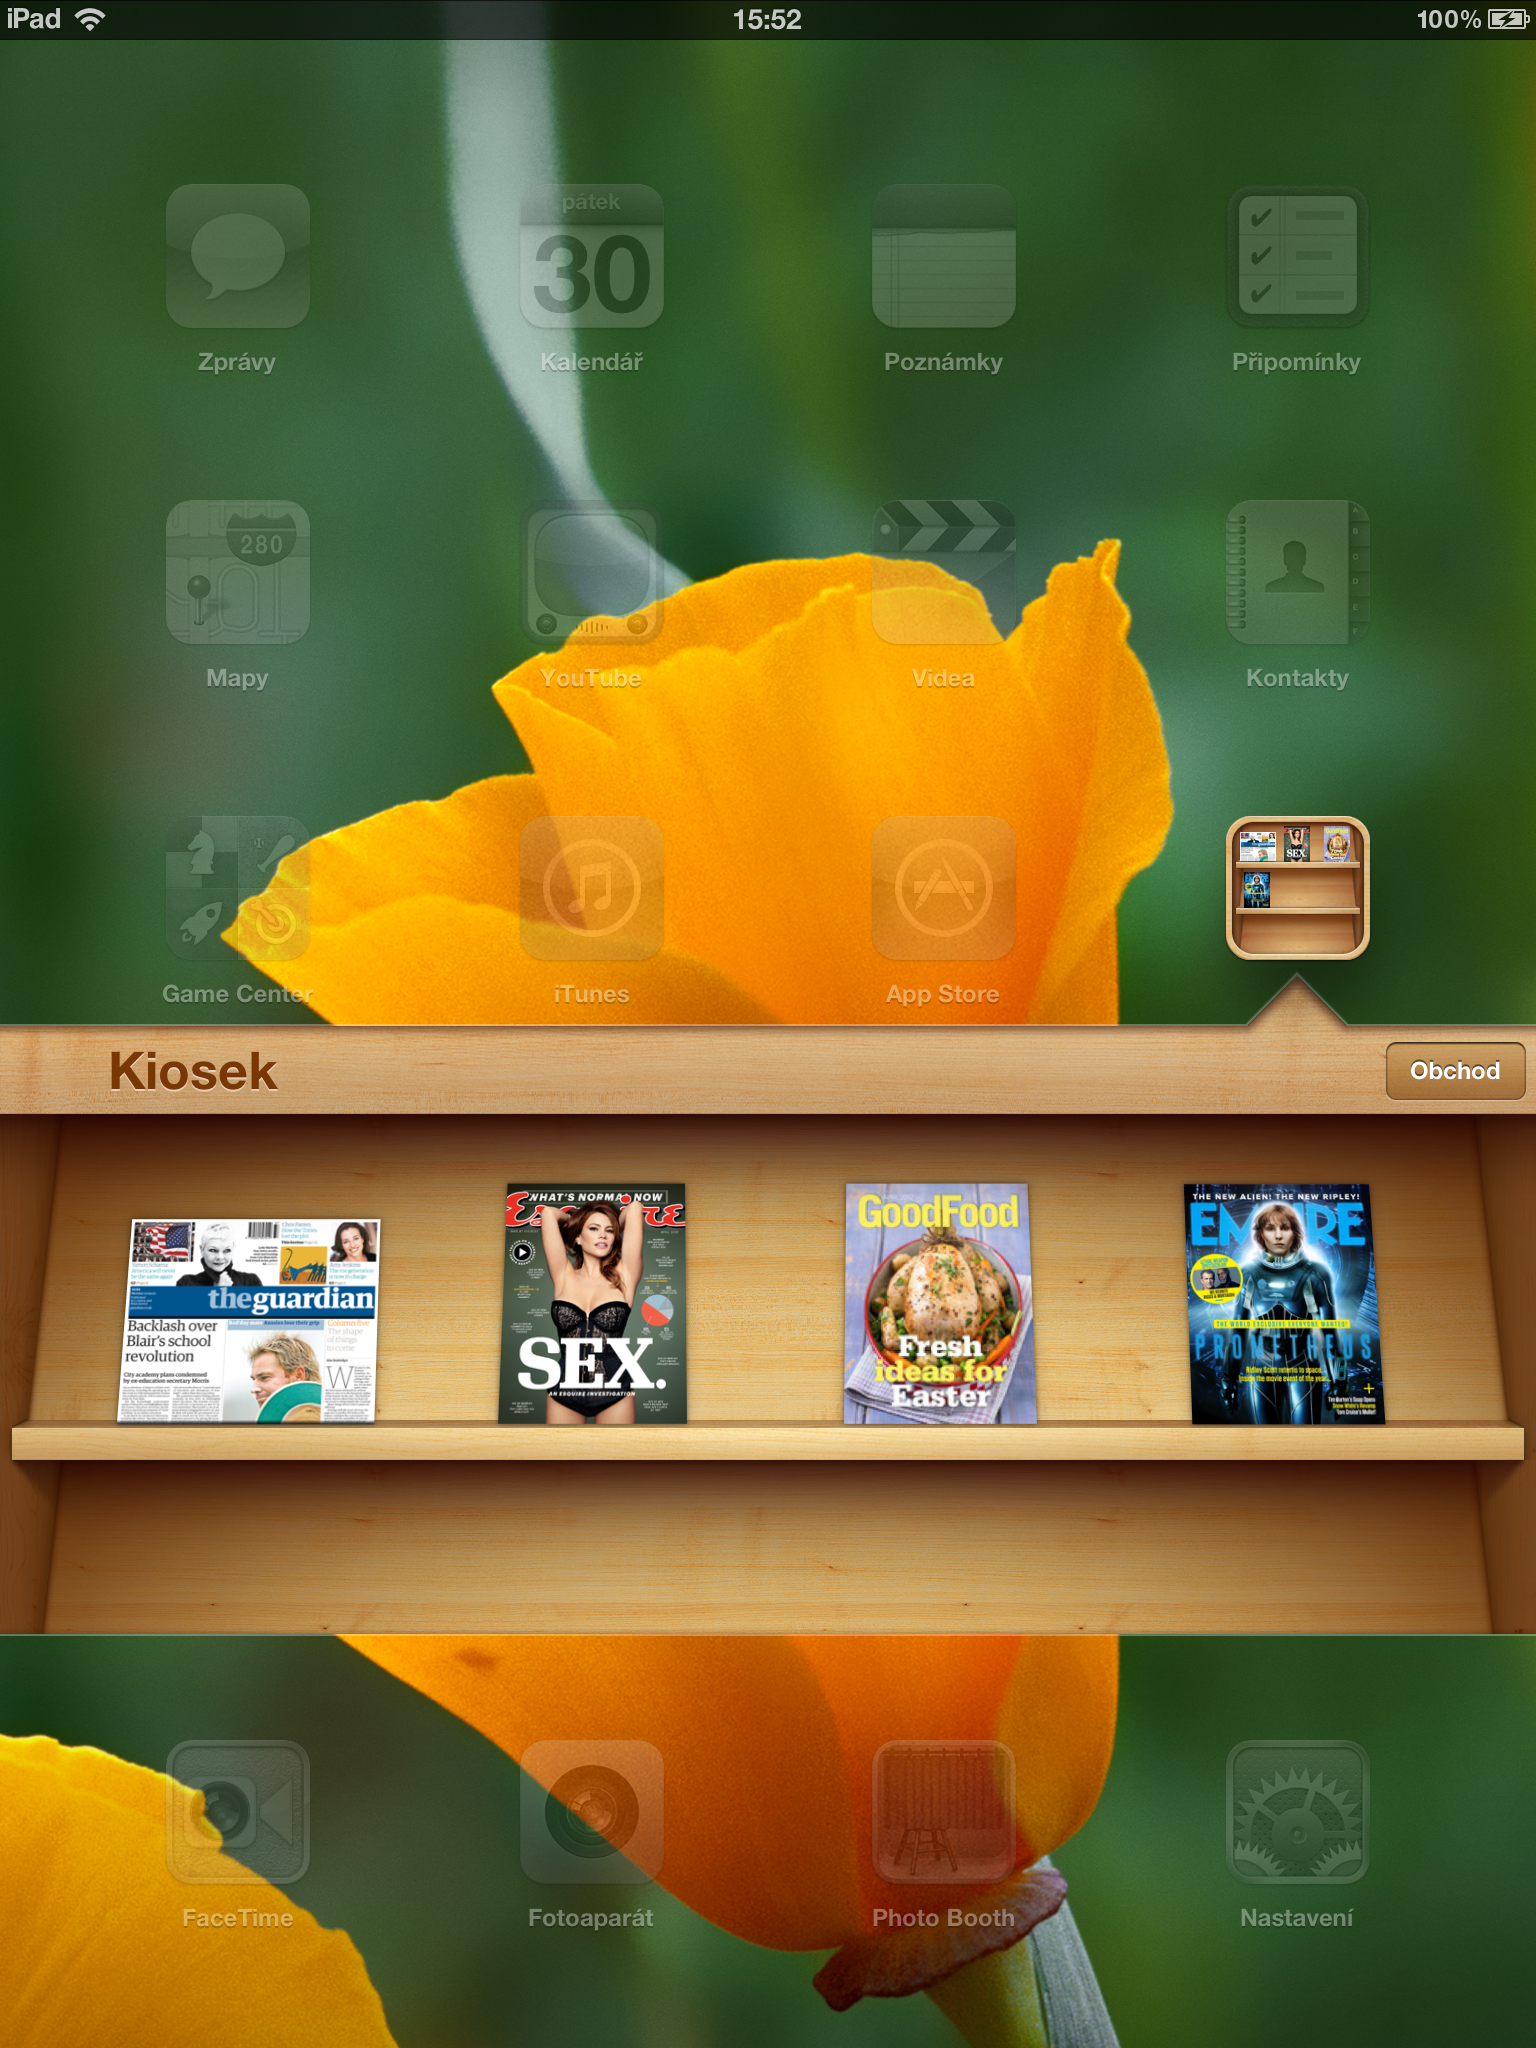 Apple iPad 2012